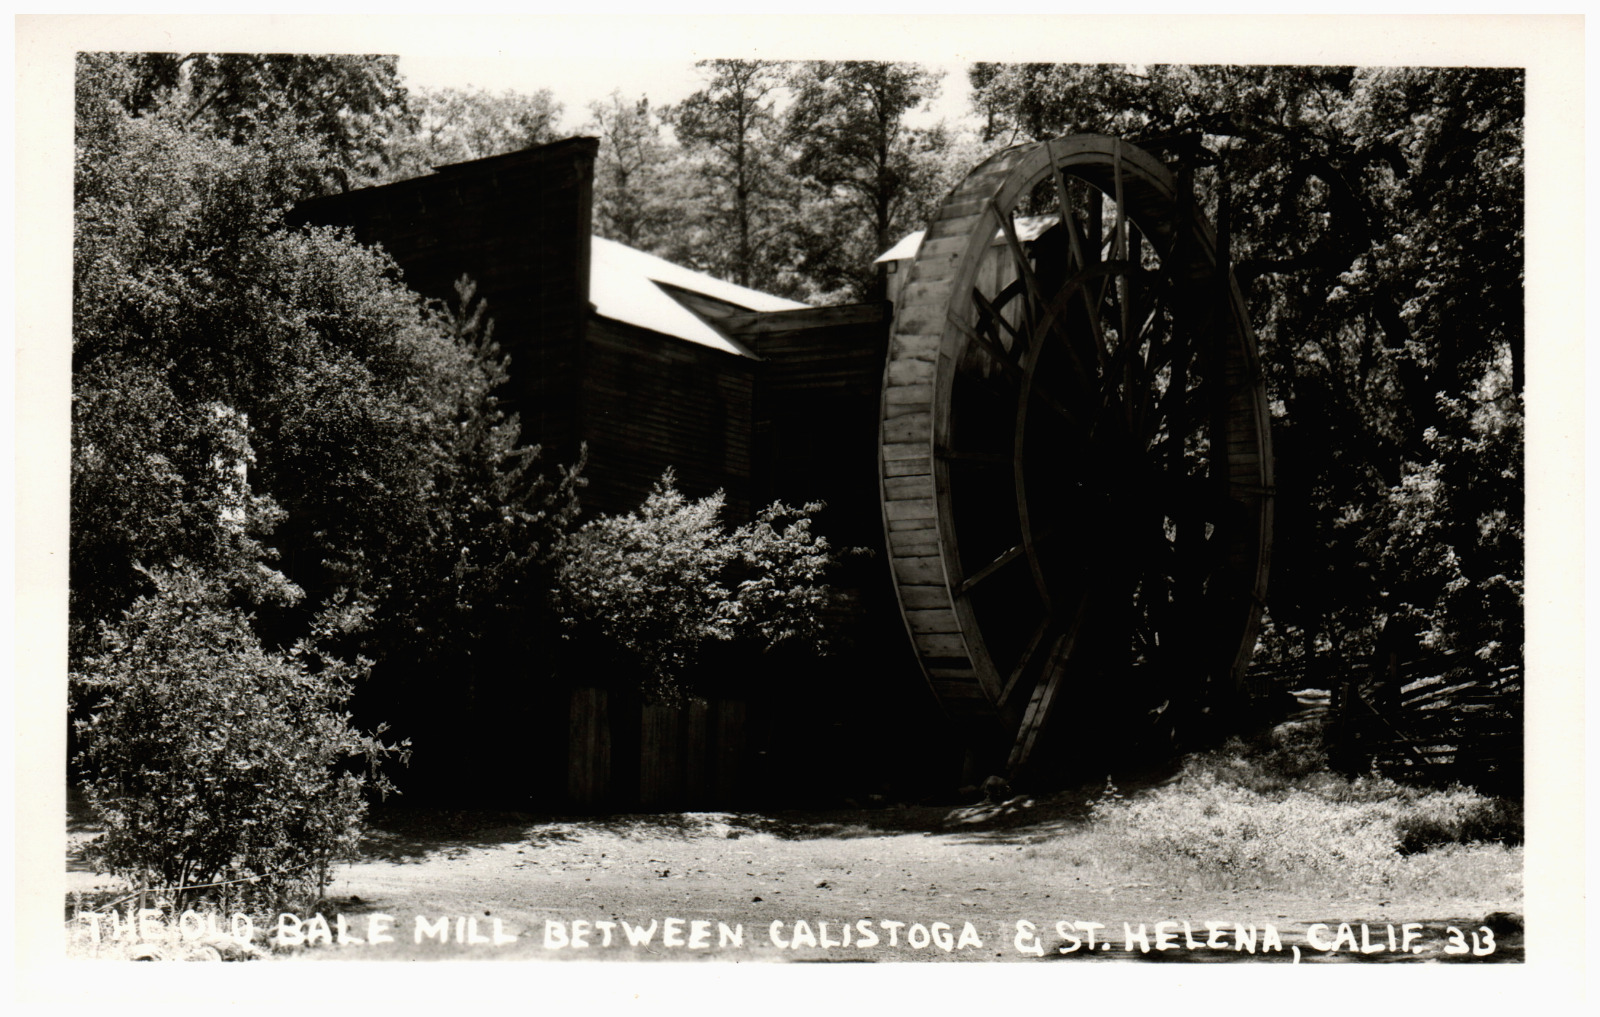 Postcard RPPC Old Bale Mill Between Calistoga & St. Helena, CA Napa Valley